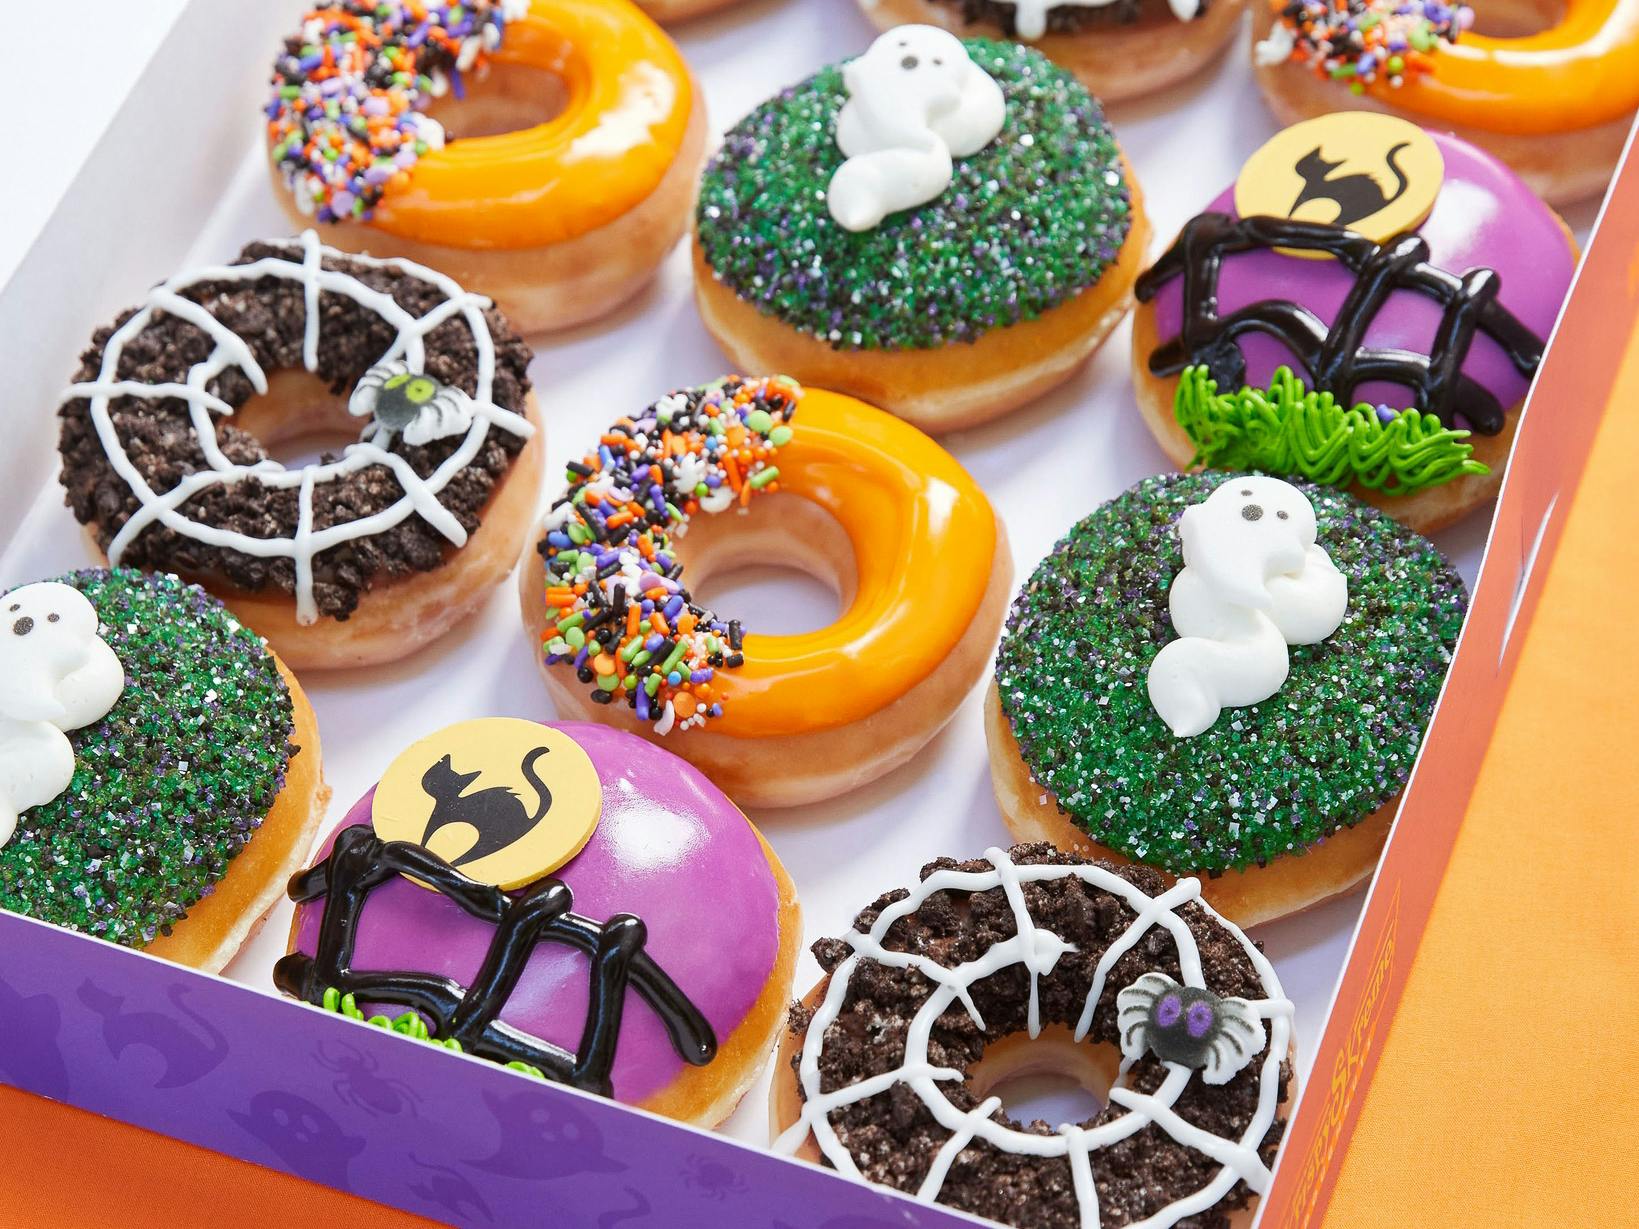 Halloween donuts from Krispy Kreme in a box.